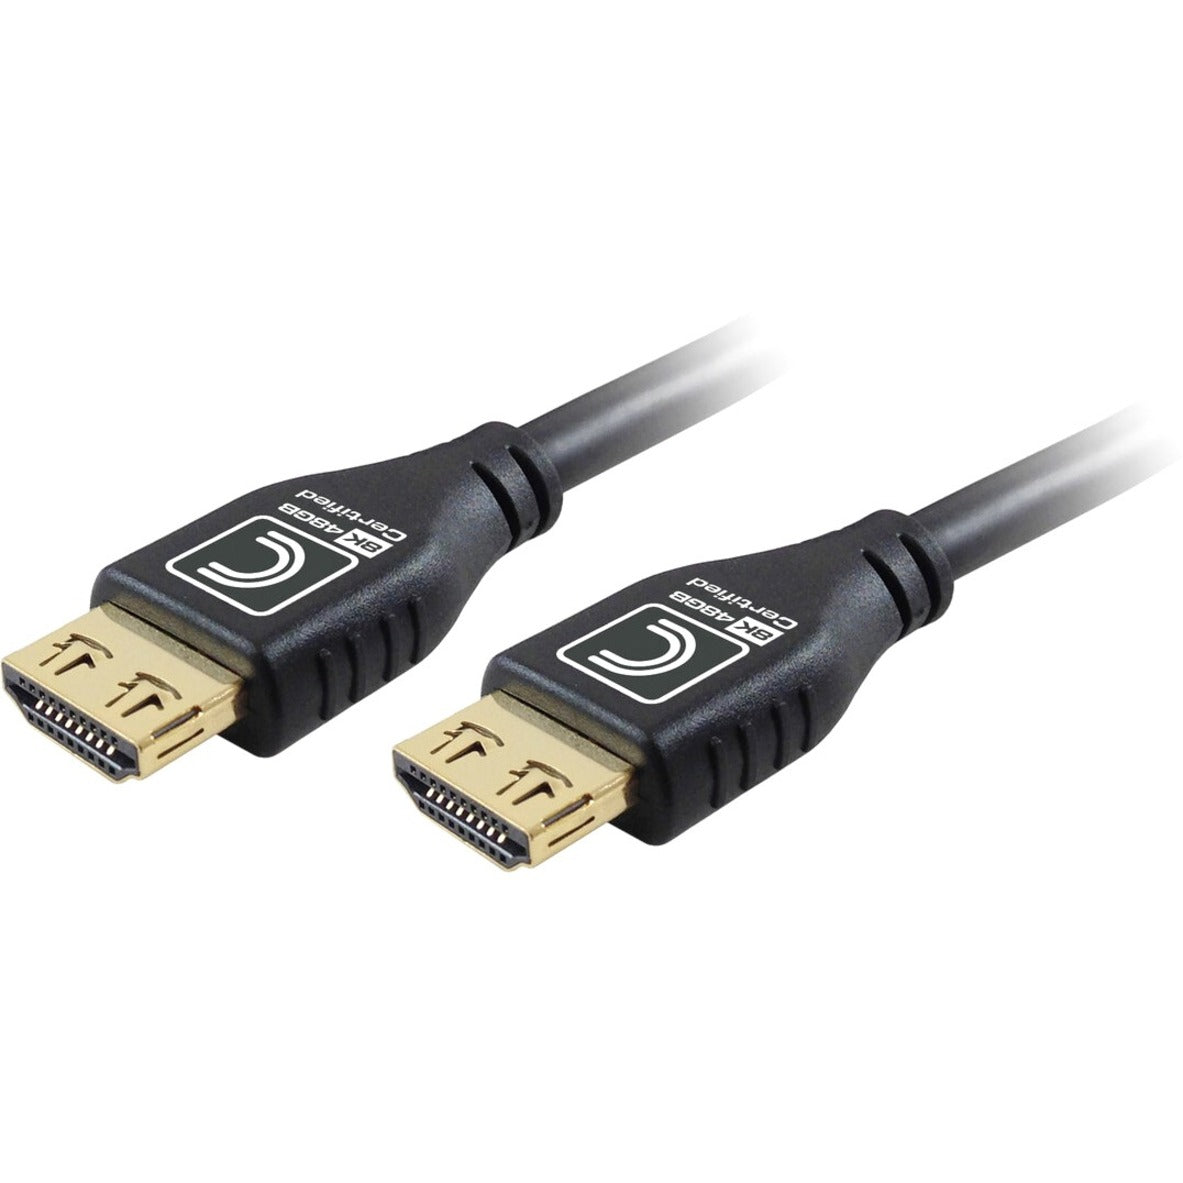 Comprehensive MHD48G-9PROBLK MicroFlex Pro AV/IT HDMI A/V Cable, 9 ft, 48 Gbit/s Data Transfer Rate, Jet Black